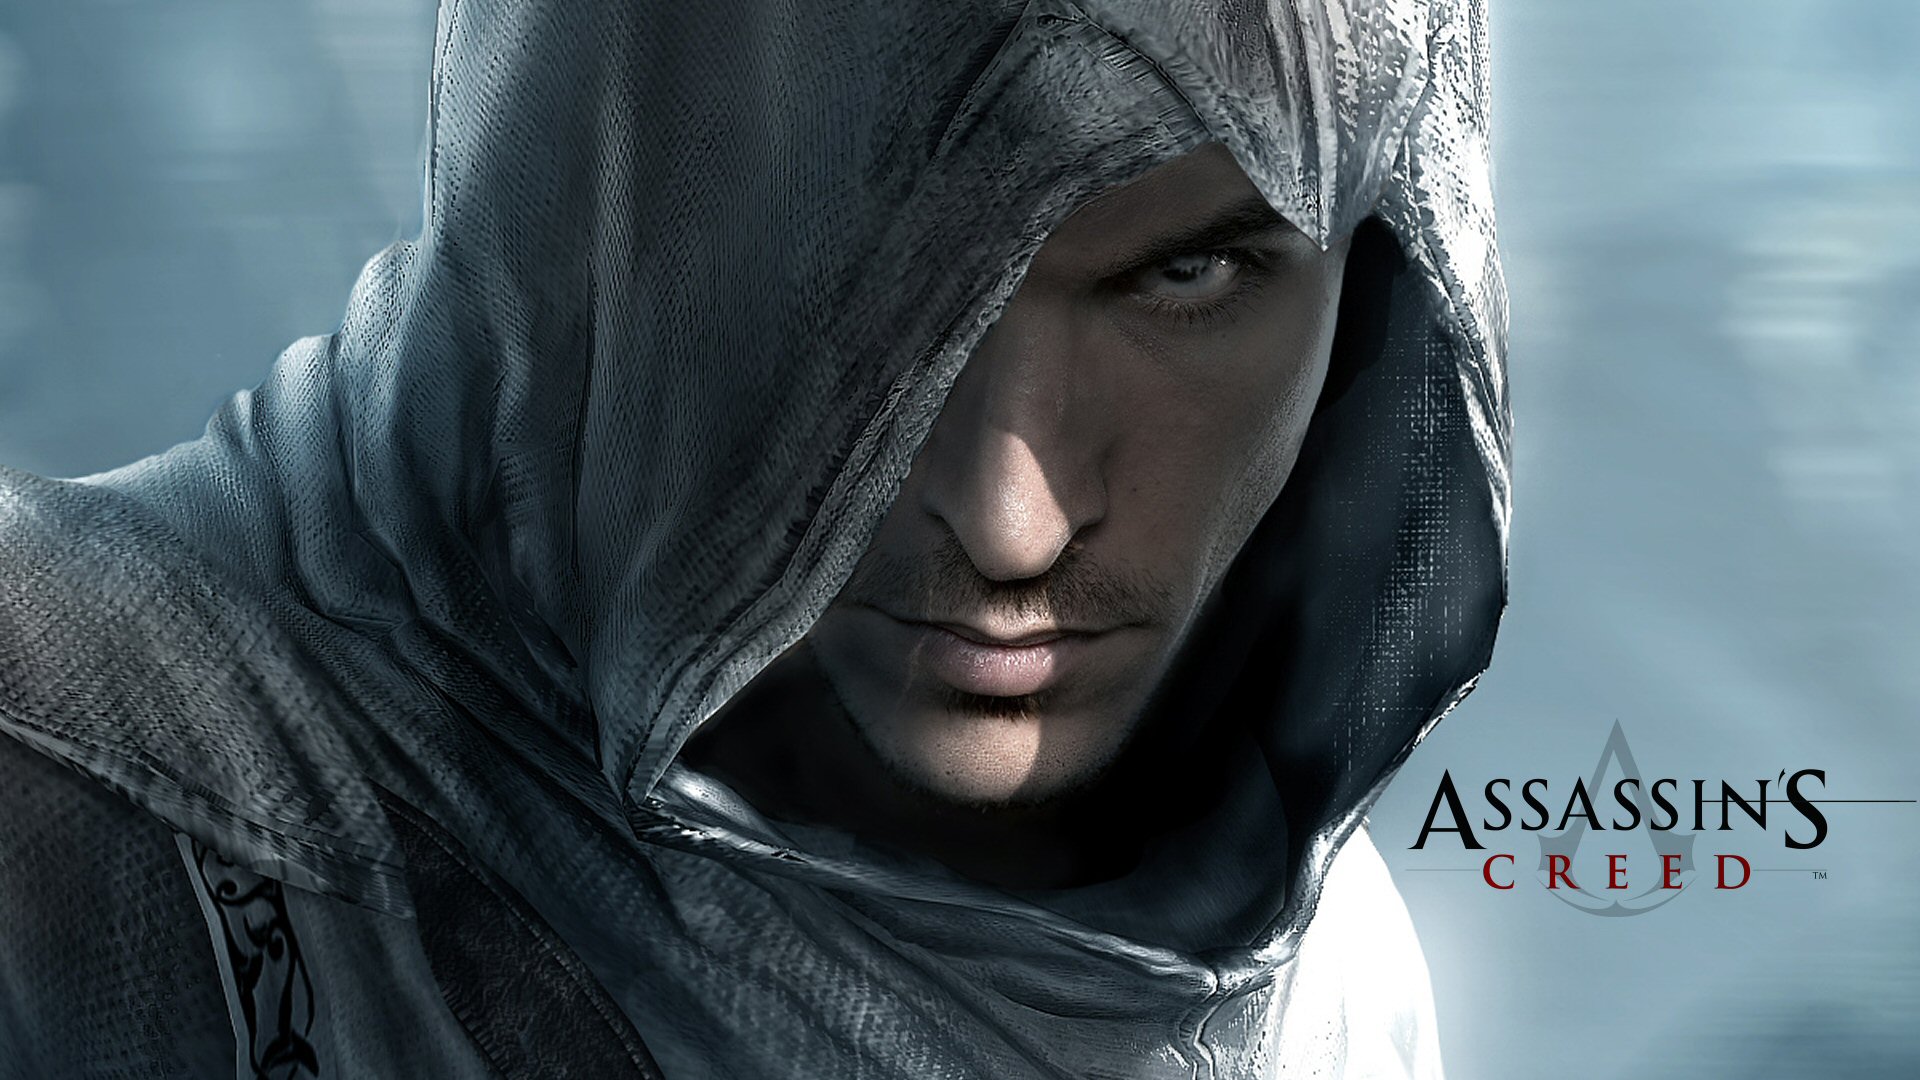 Мужчины без игры. Альтаир ибн ла-Ахад лицо. Дезмонд Майлз в Assassins Creed 1. Assassin's Creed 1 Альтаир. Капюшон Альтаира ассасин.